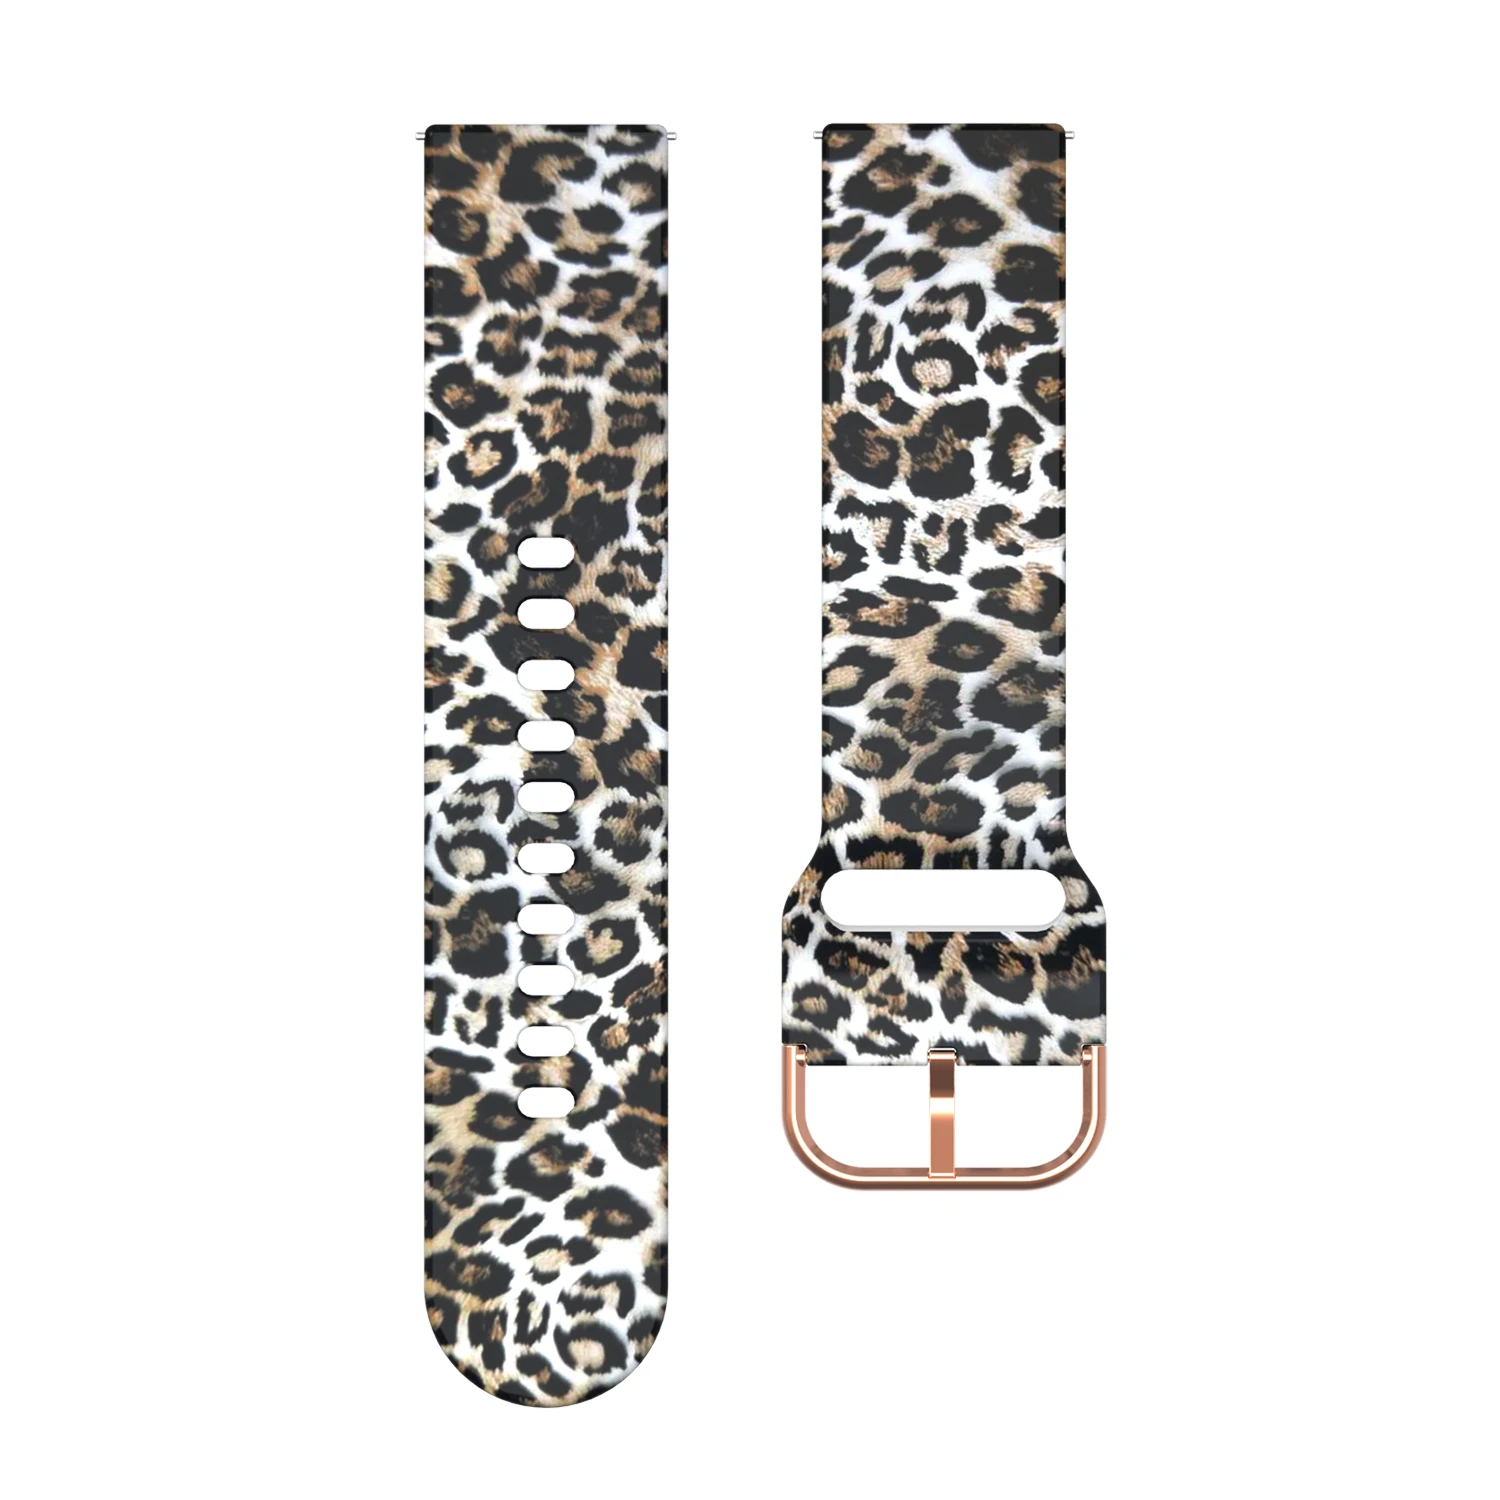 Fashion 20mm Camo Silicone Watch Strap Band For Garmin Vivoactive 3 Smart Watch Replacement Bracelet Wrist band strap girl Women - Color: Leopard